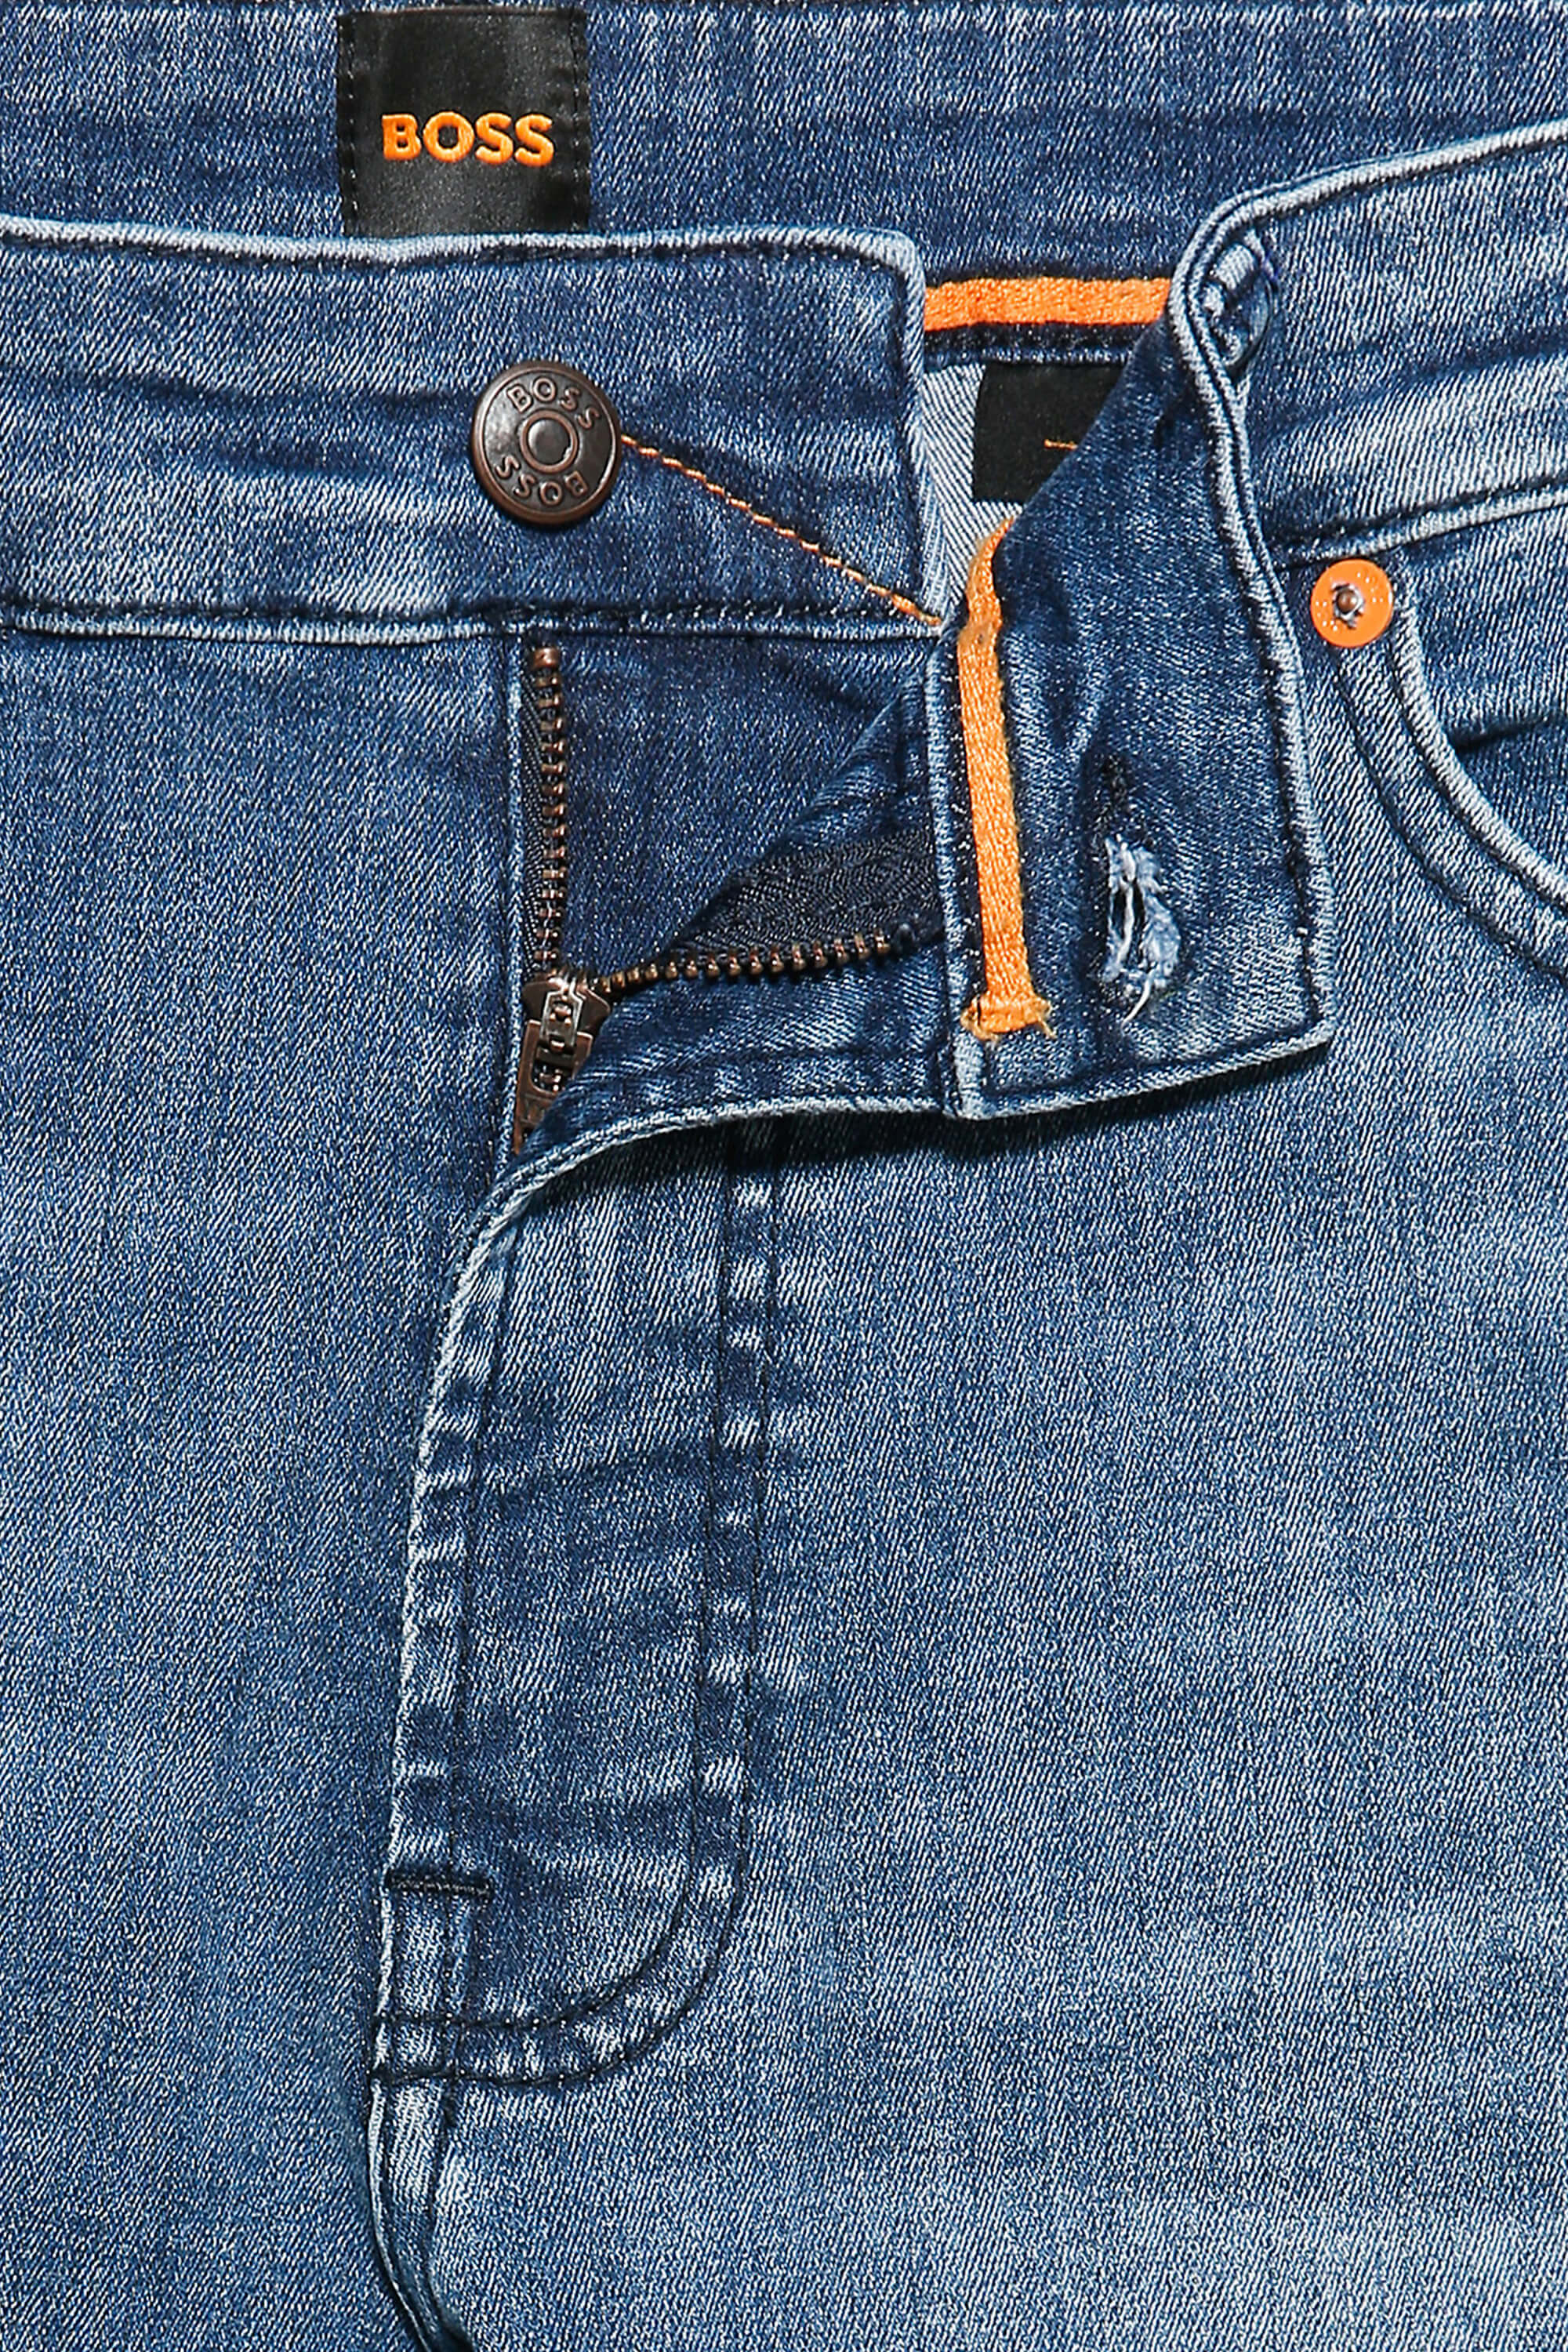 Hugo Boss Maine Film Jeans